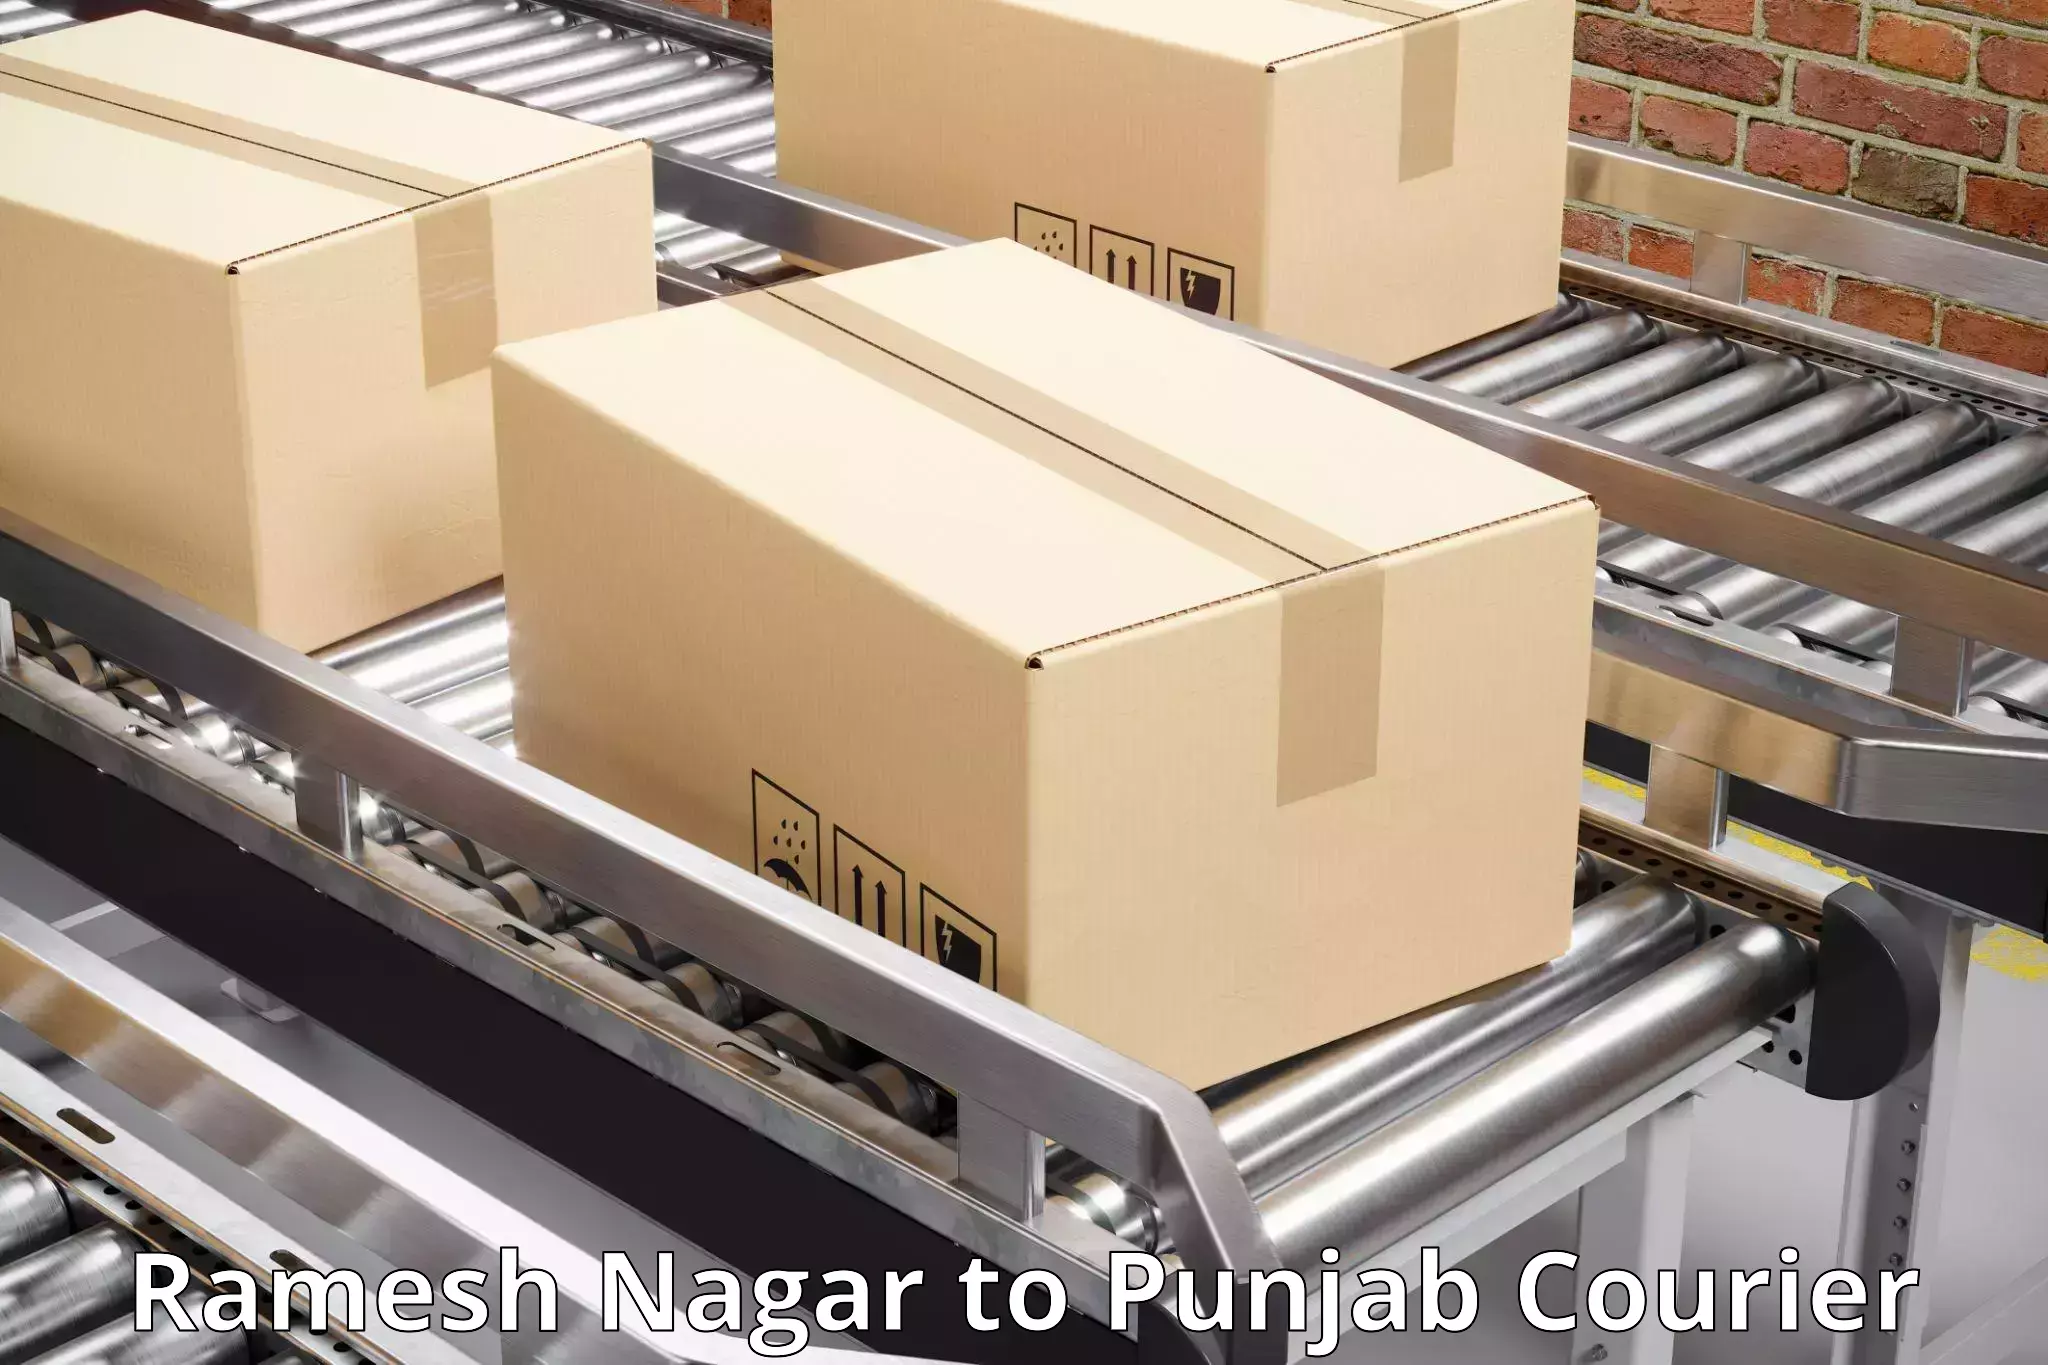 Quality courier partnerships Ramesh Nagar to Mohali